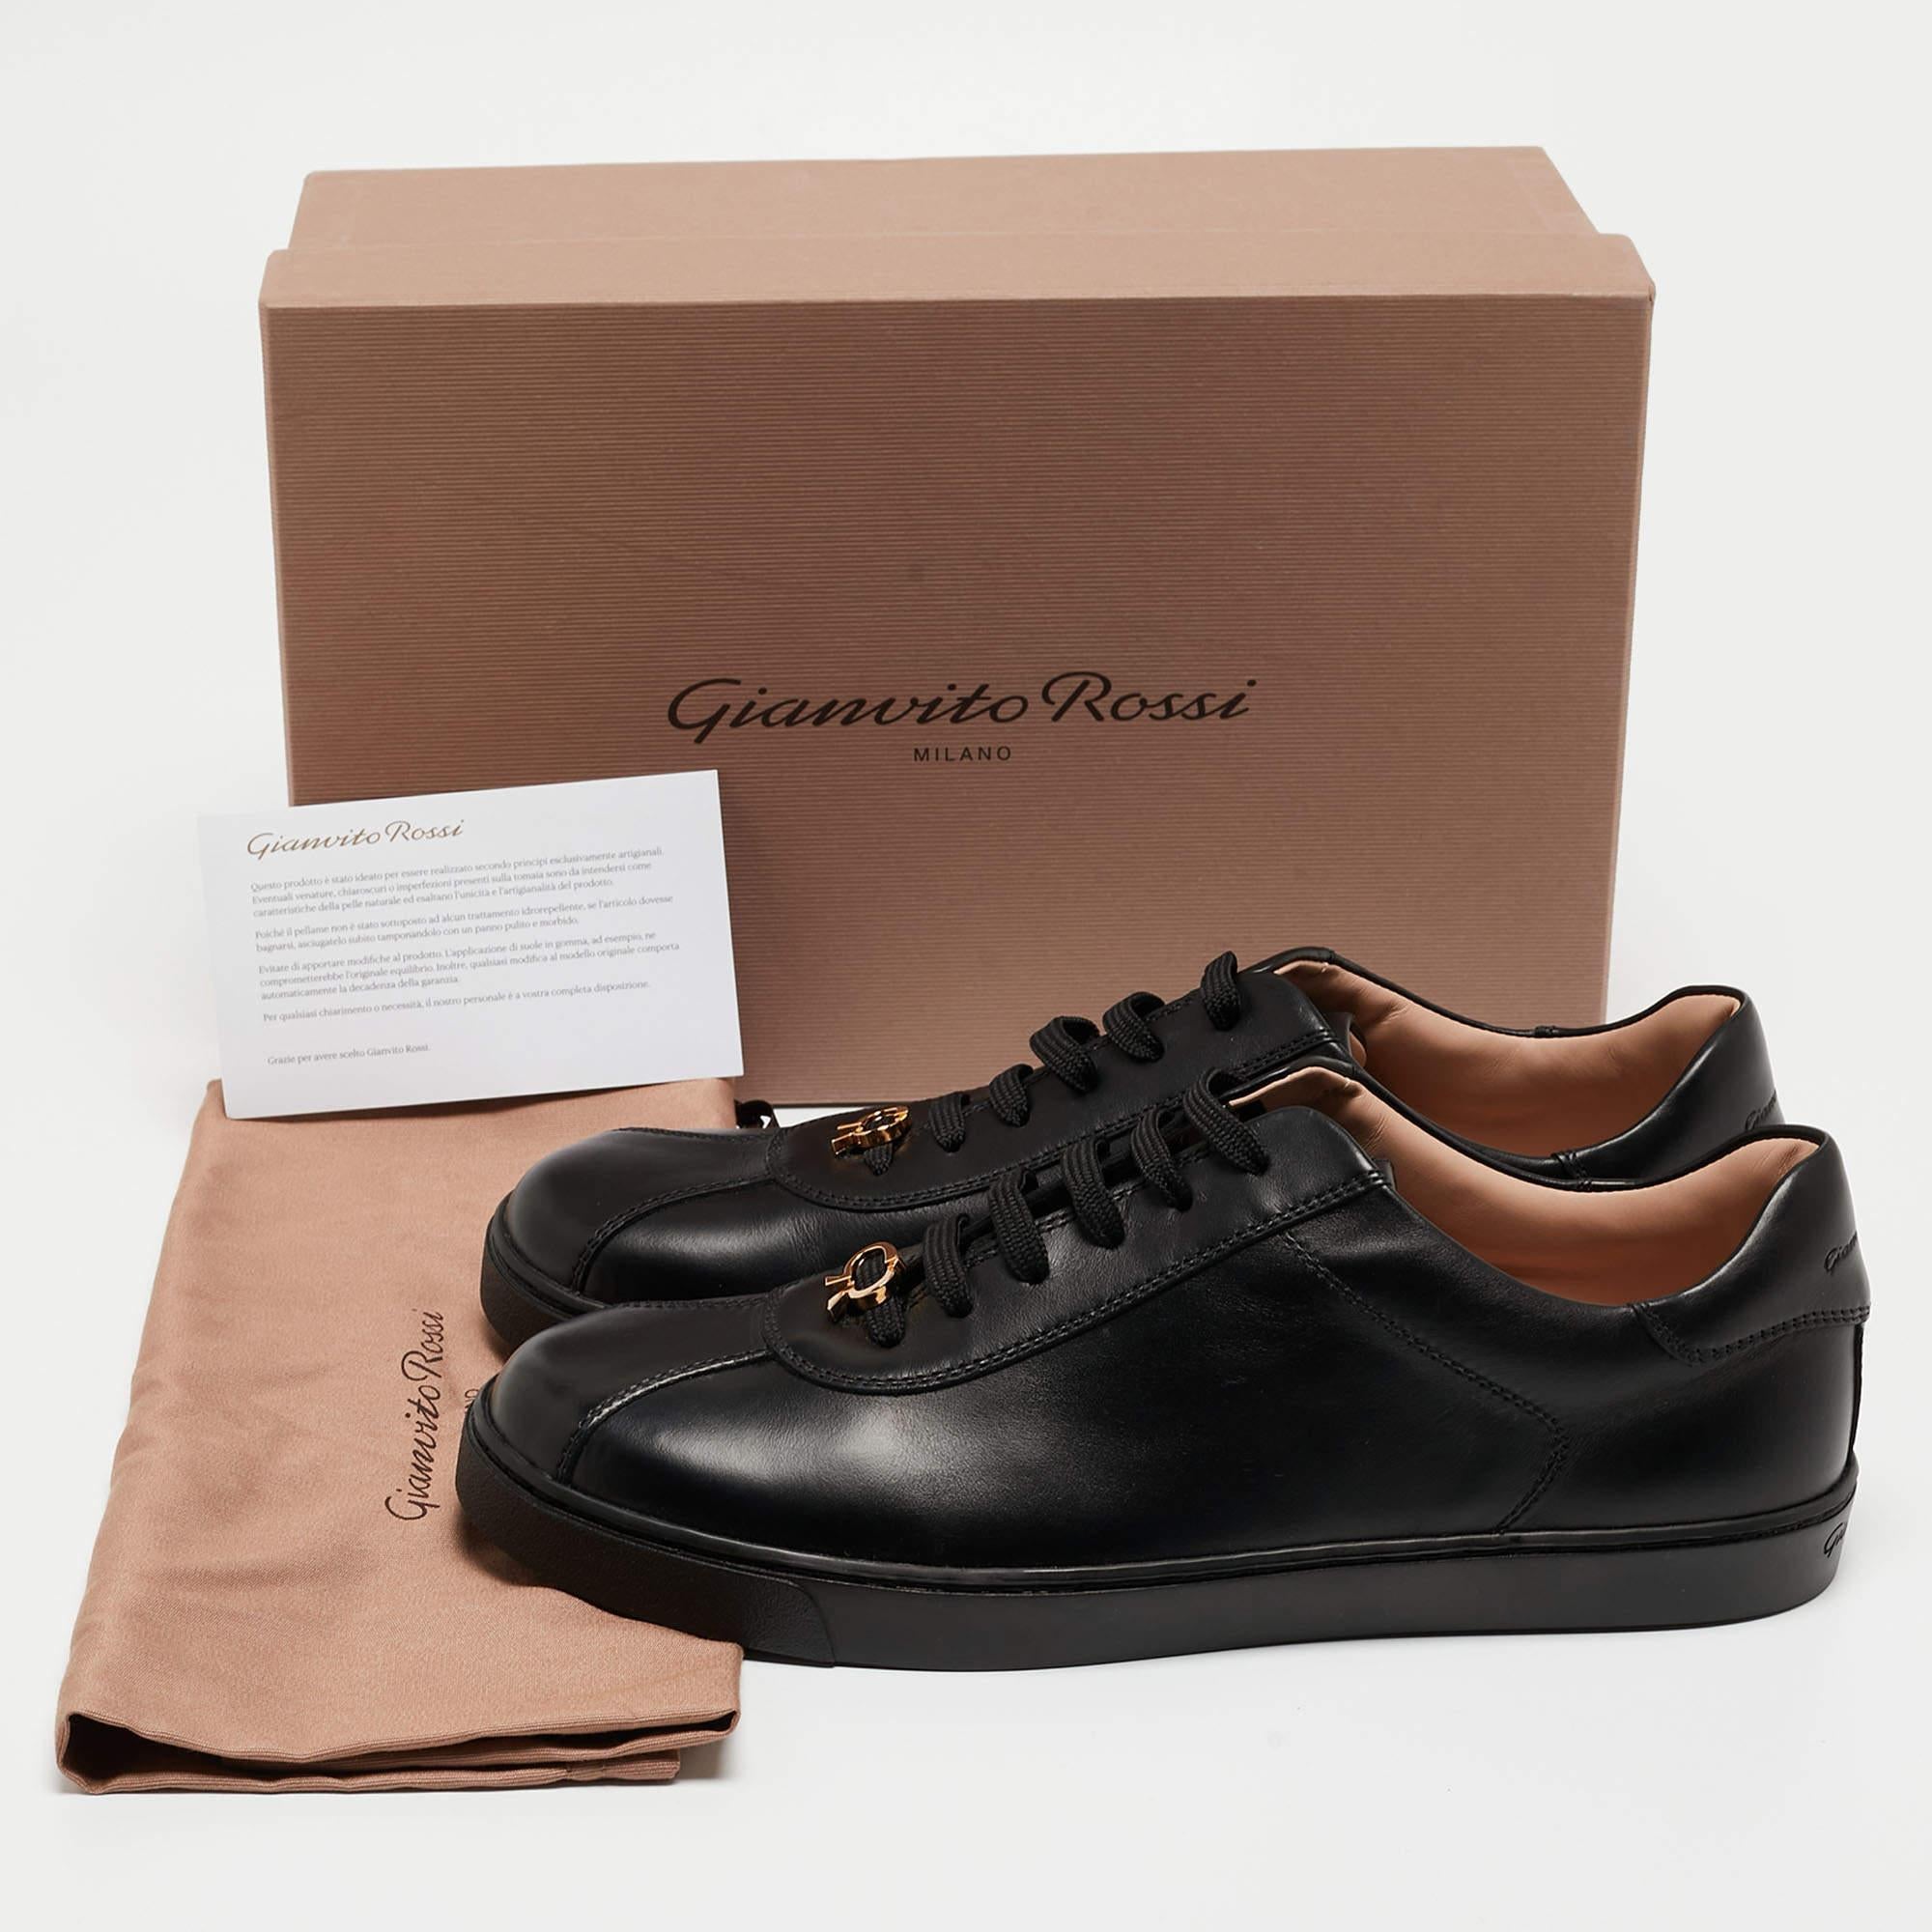 Gianvito Rossi Black Leather Low Top Sneakers Size 39 In Excellent Condition For Sale In Dubai, Al Qouz 2